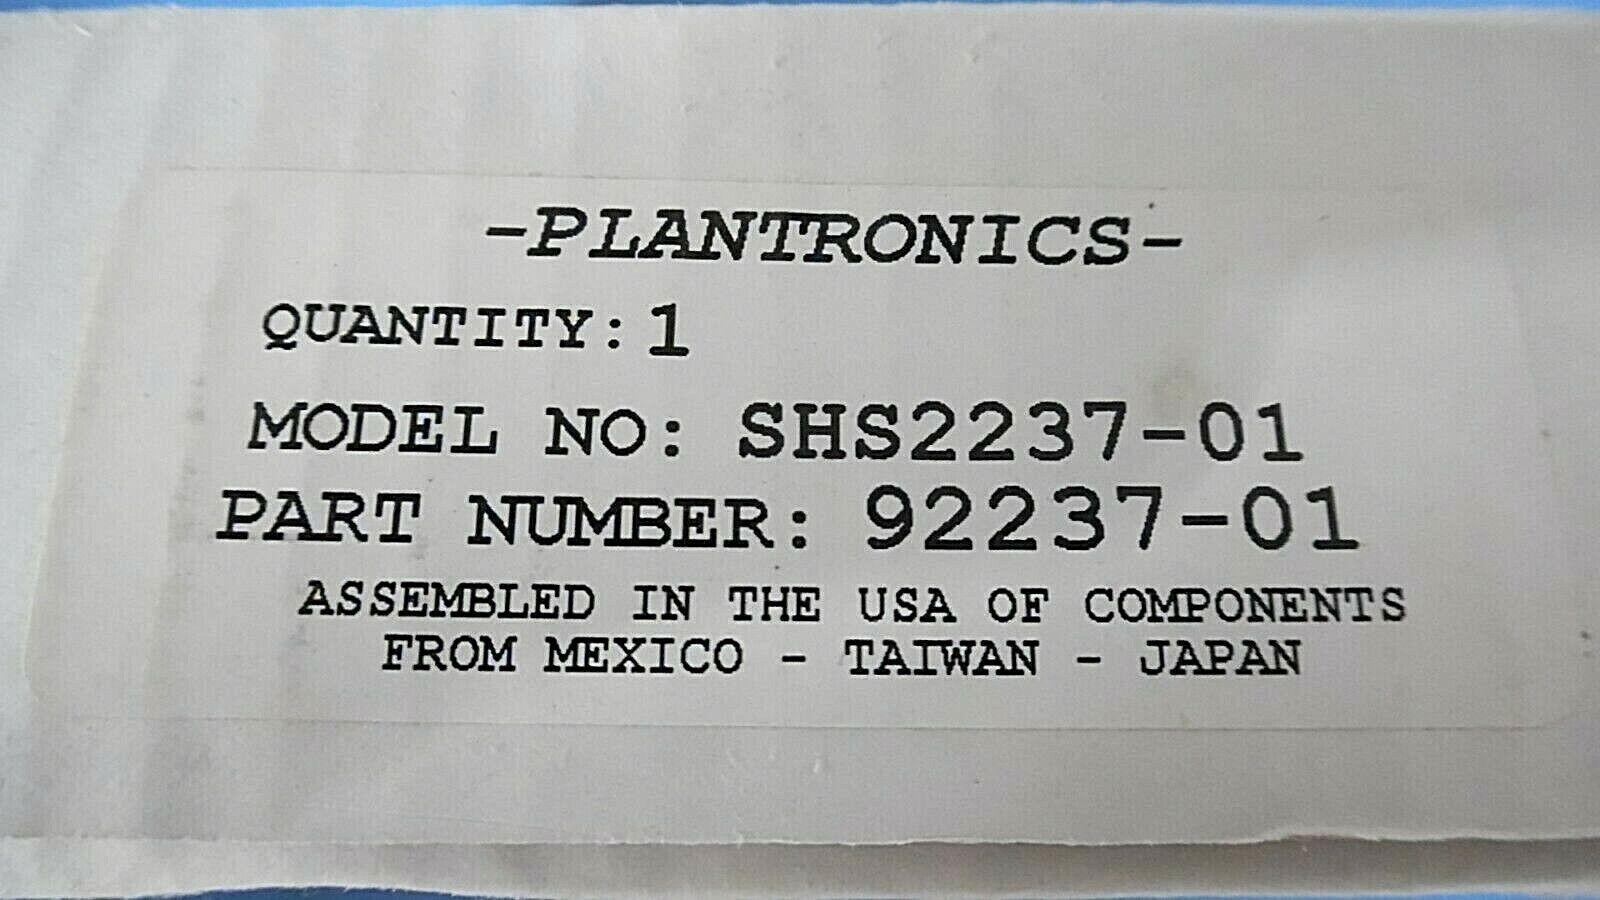 NEW Plantronics 92237-01, SHS2237-01 HEADSET -OUT OF BOX CLEARANCE PRICE Plantronics 92237-01, SHS2237-01 - фотография #12